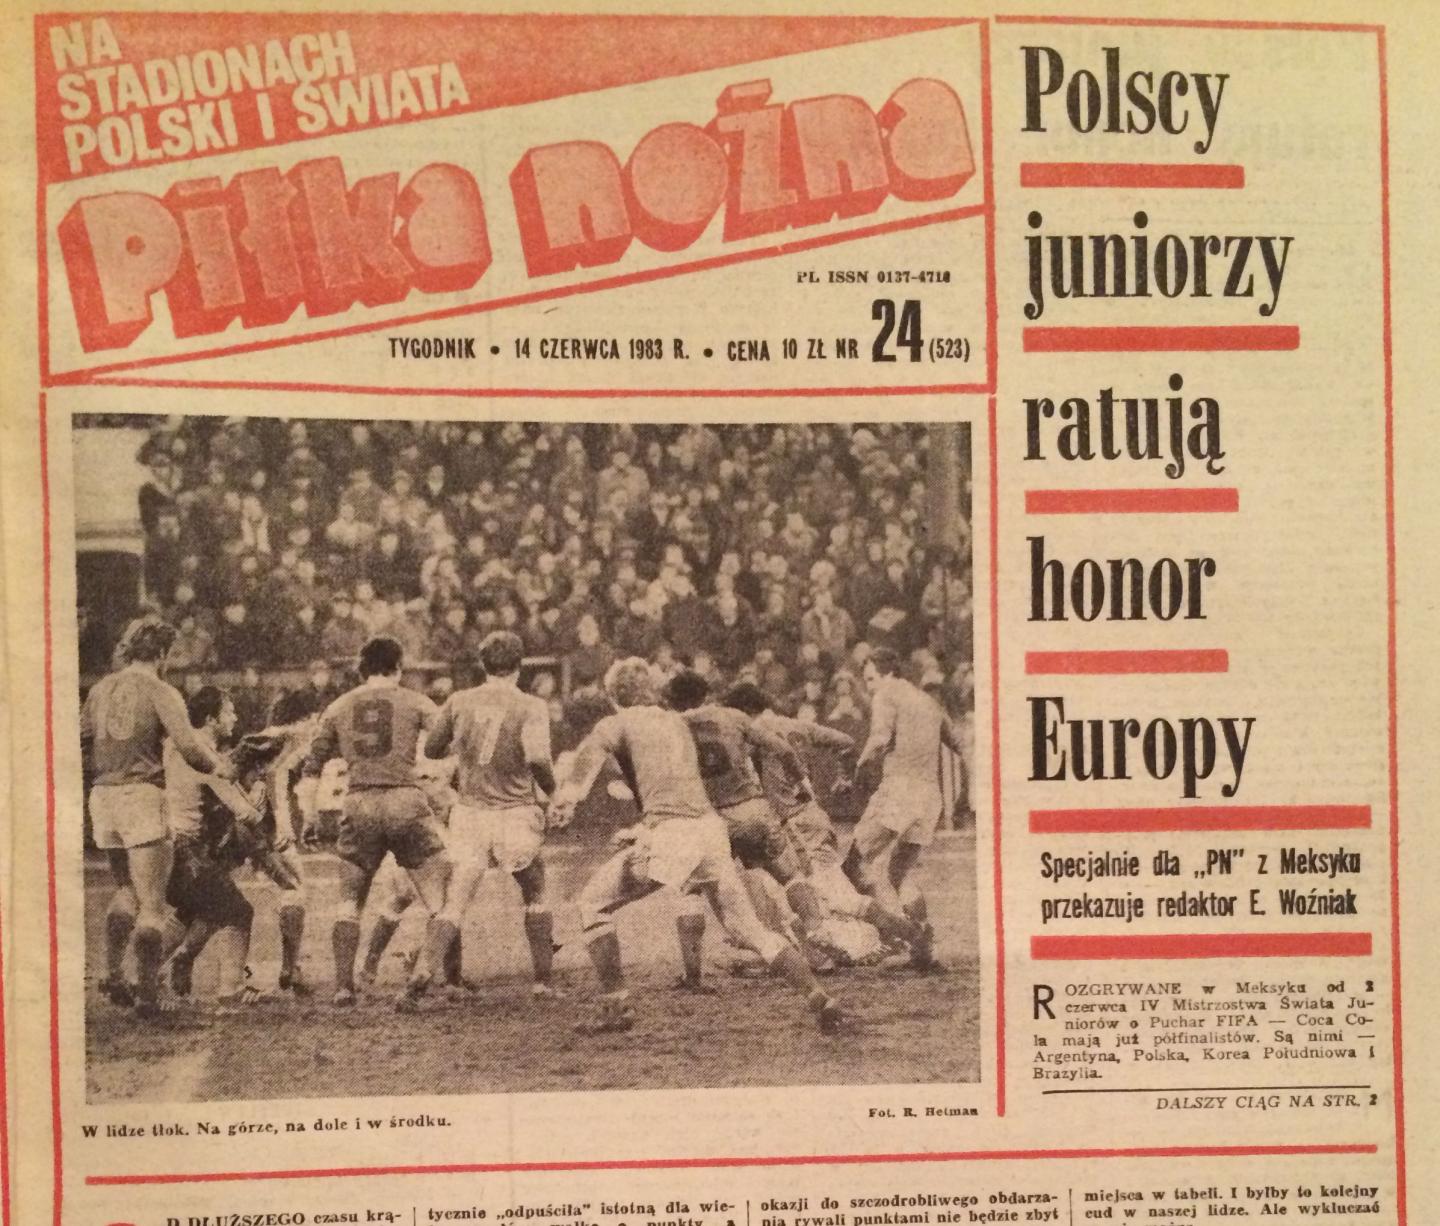 Polska – USA 2:0 U20 (08.06.1983) Piłka Nożna